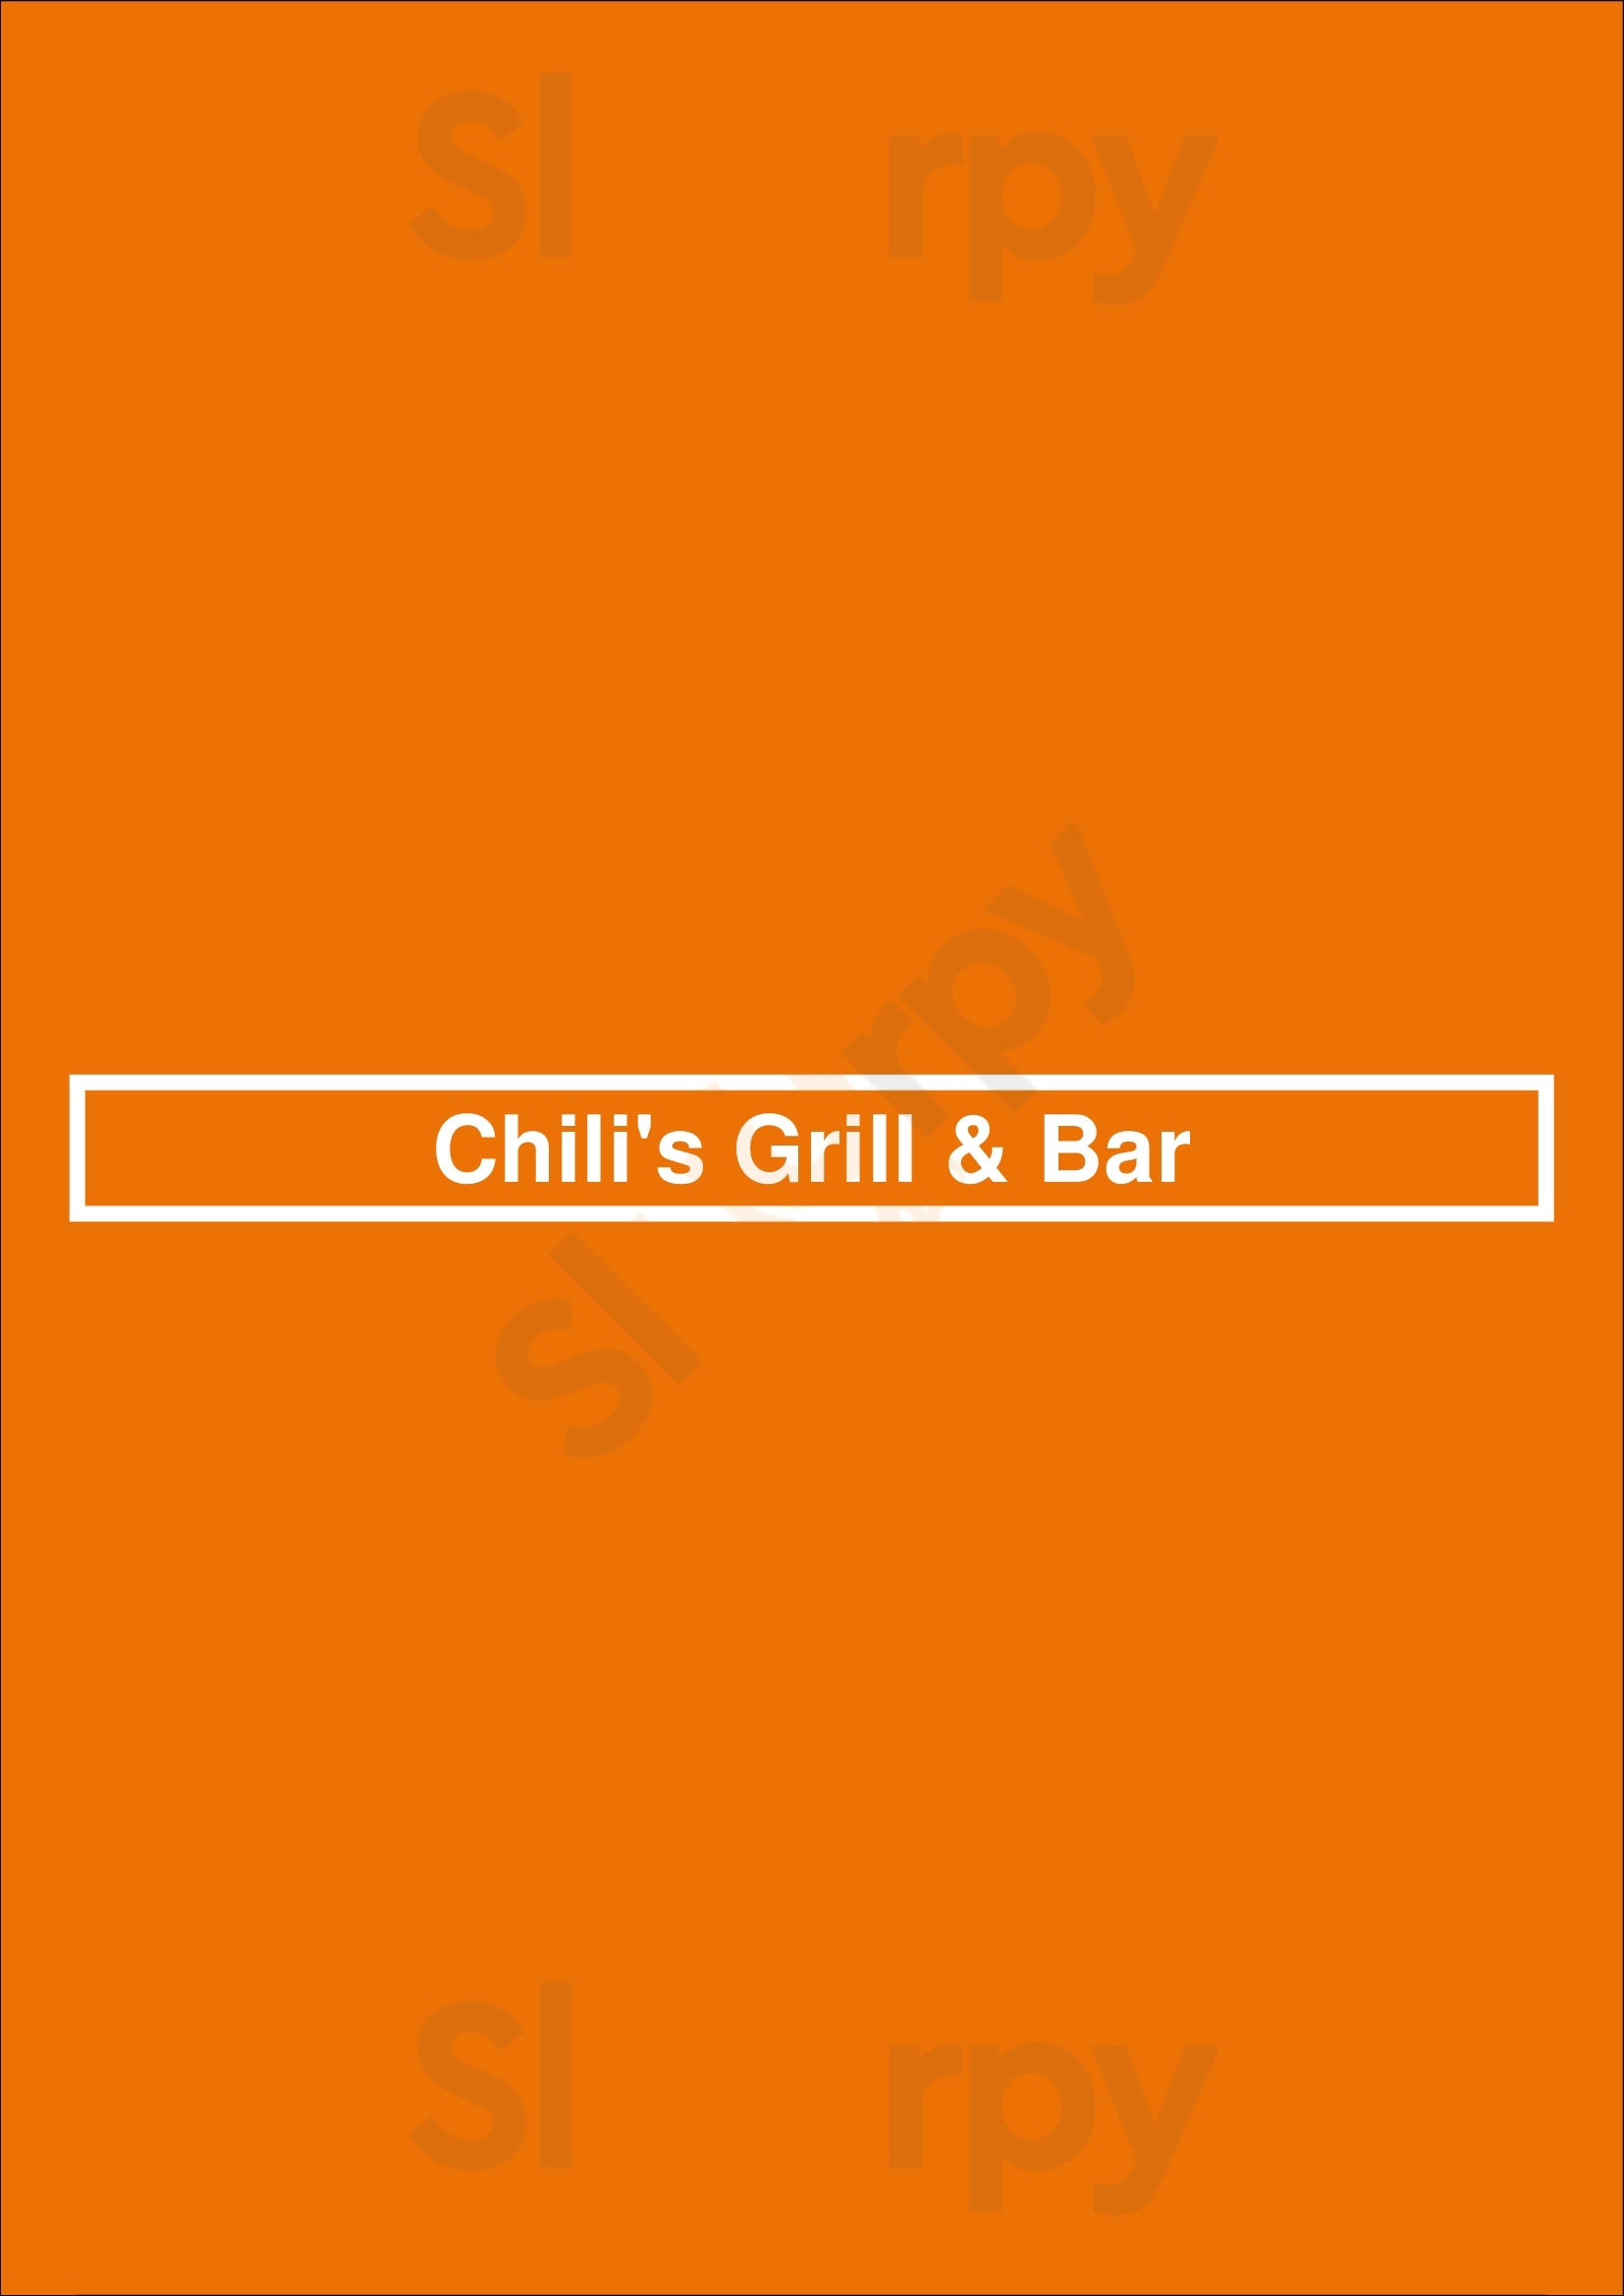 Chili's Grill & Bar Chattanooga Menu - 1